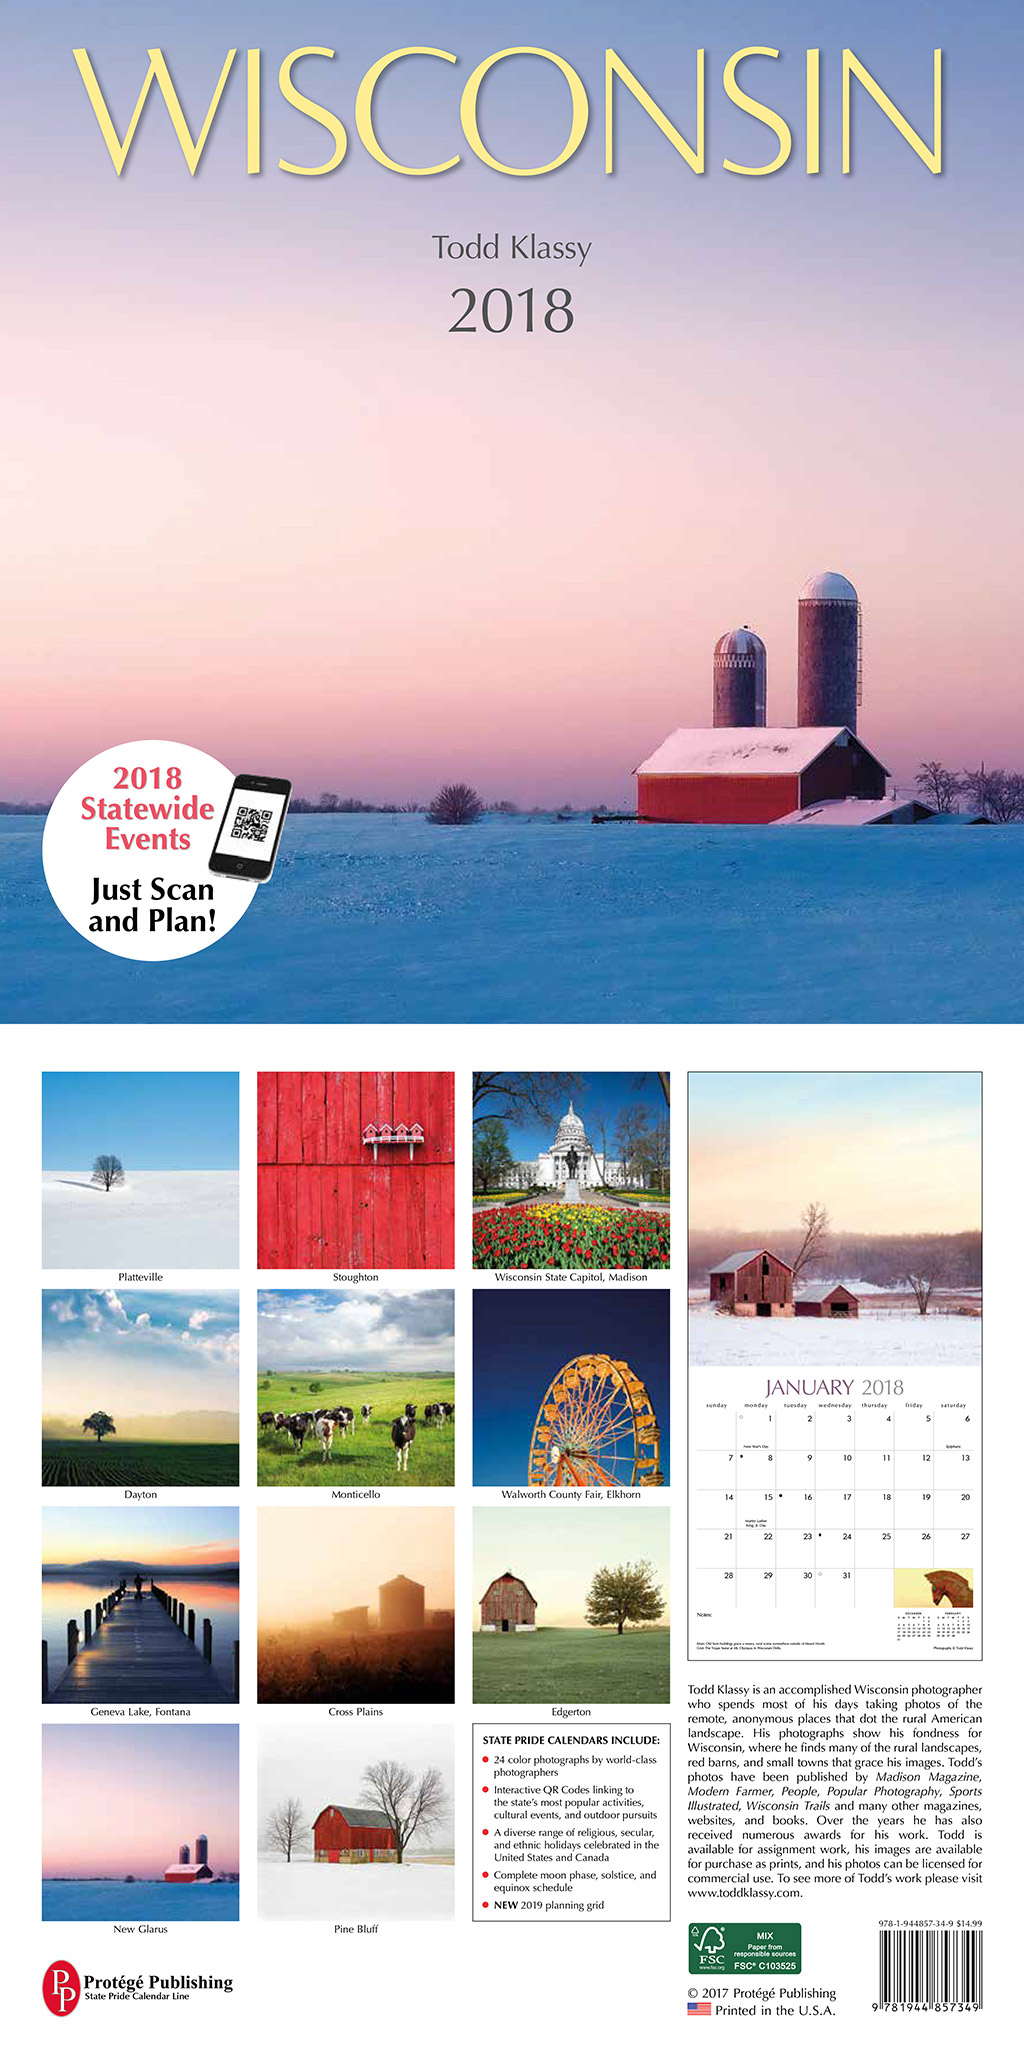 Sneak peek of my new 2018 Wisconsin calendar